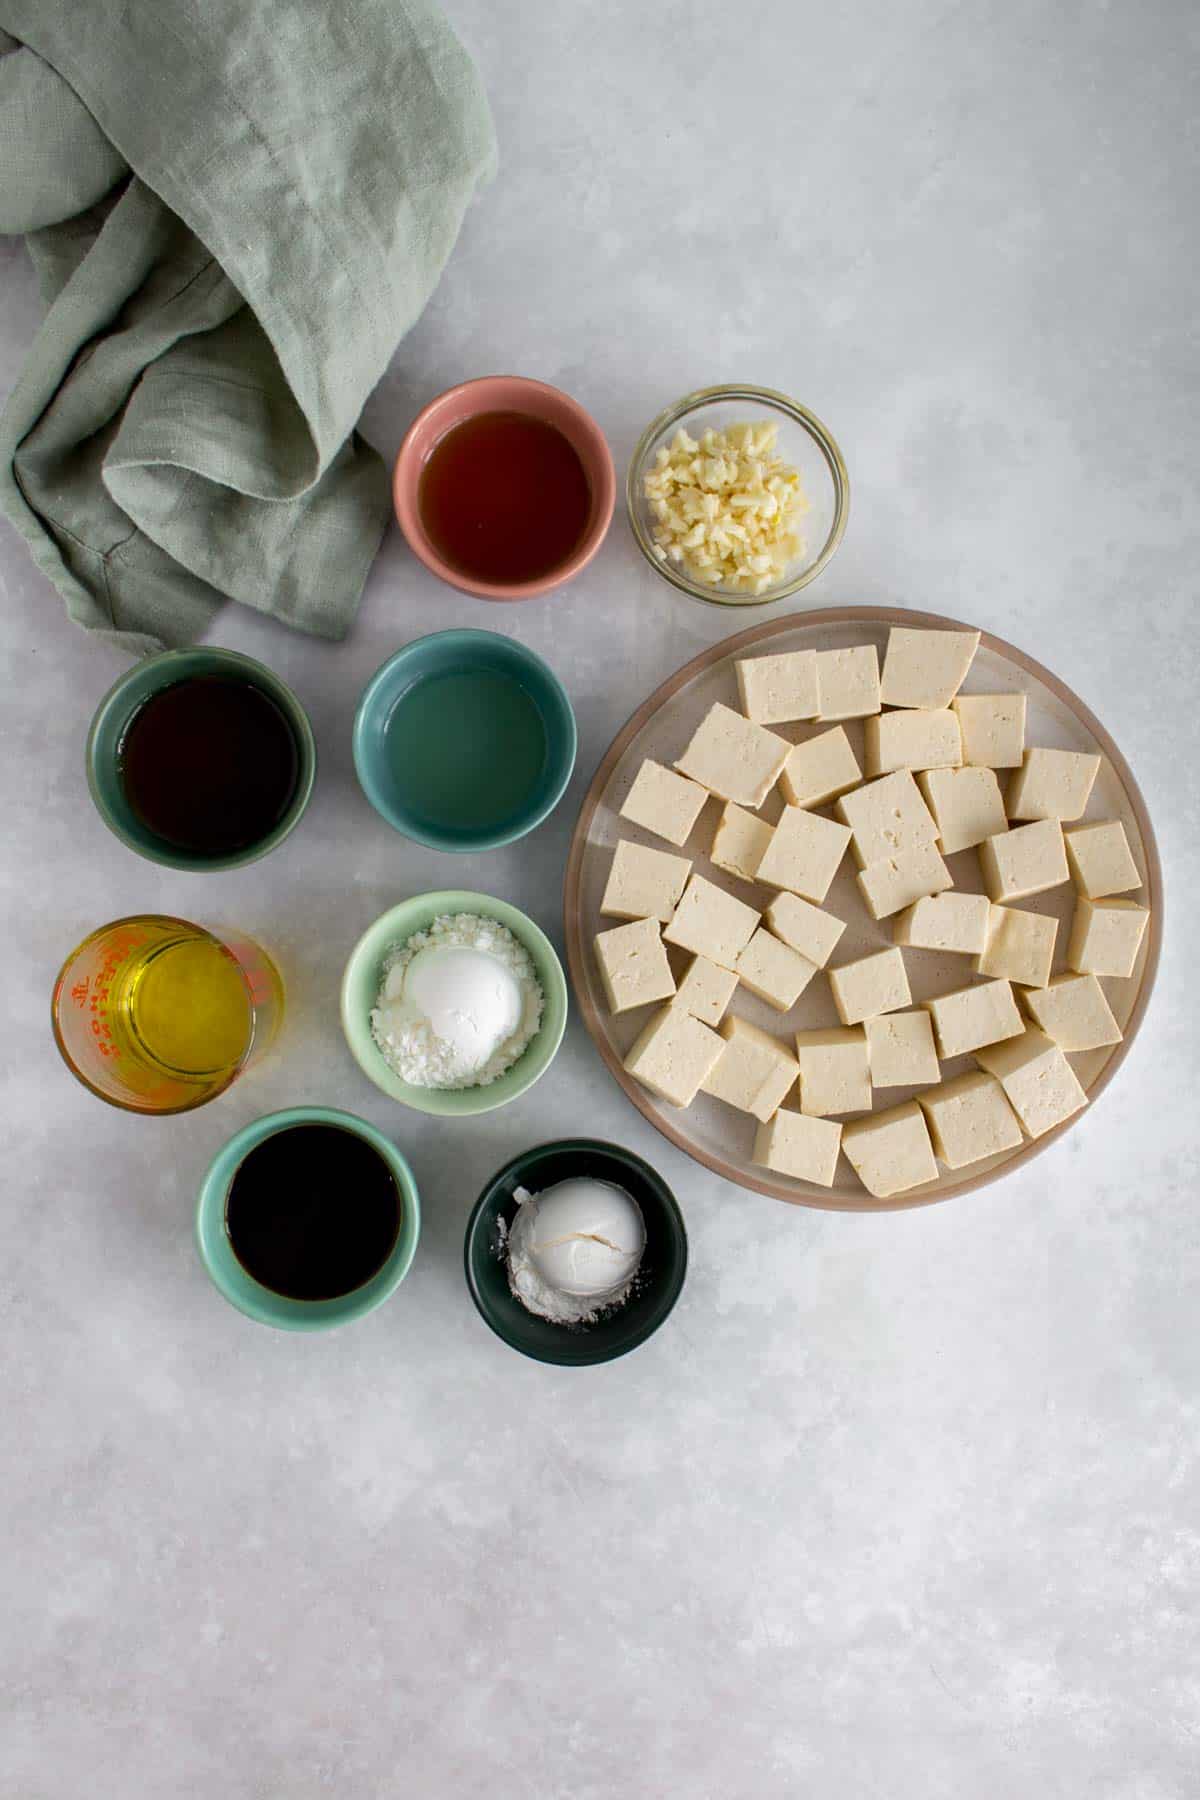 Ingredients needed to make crispy sesame tofu.